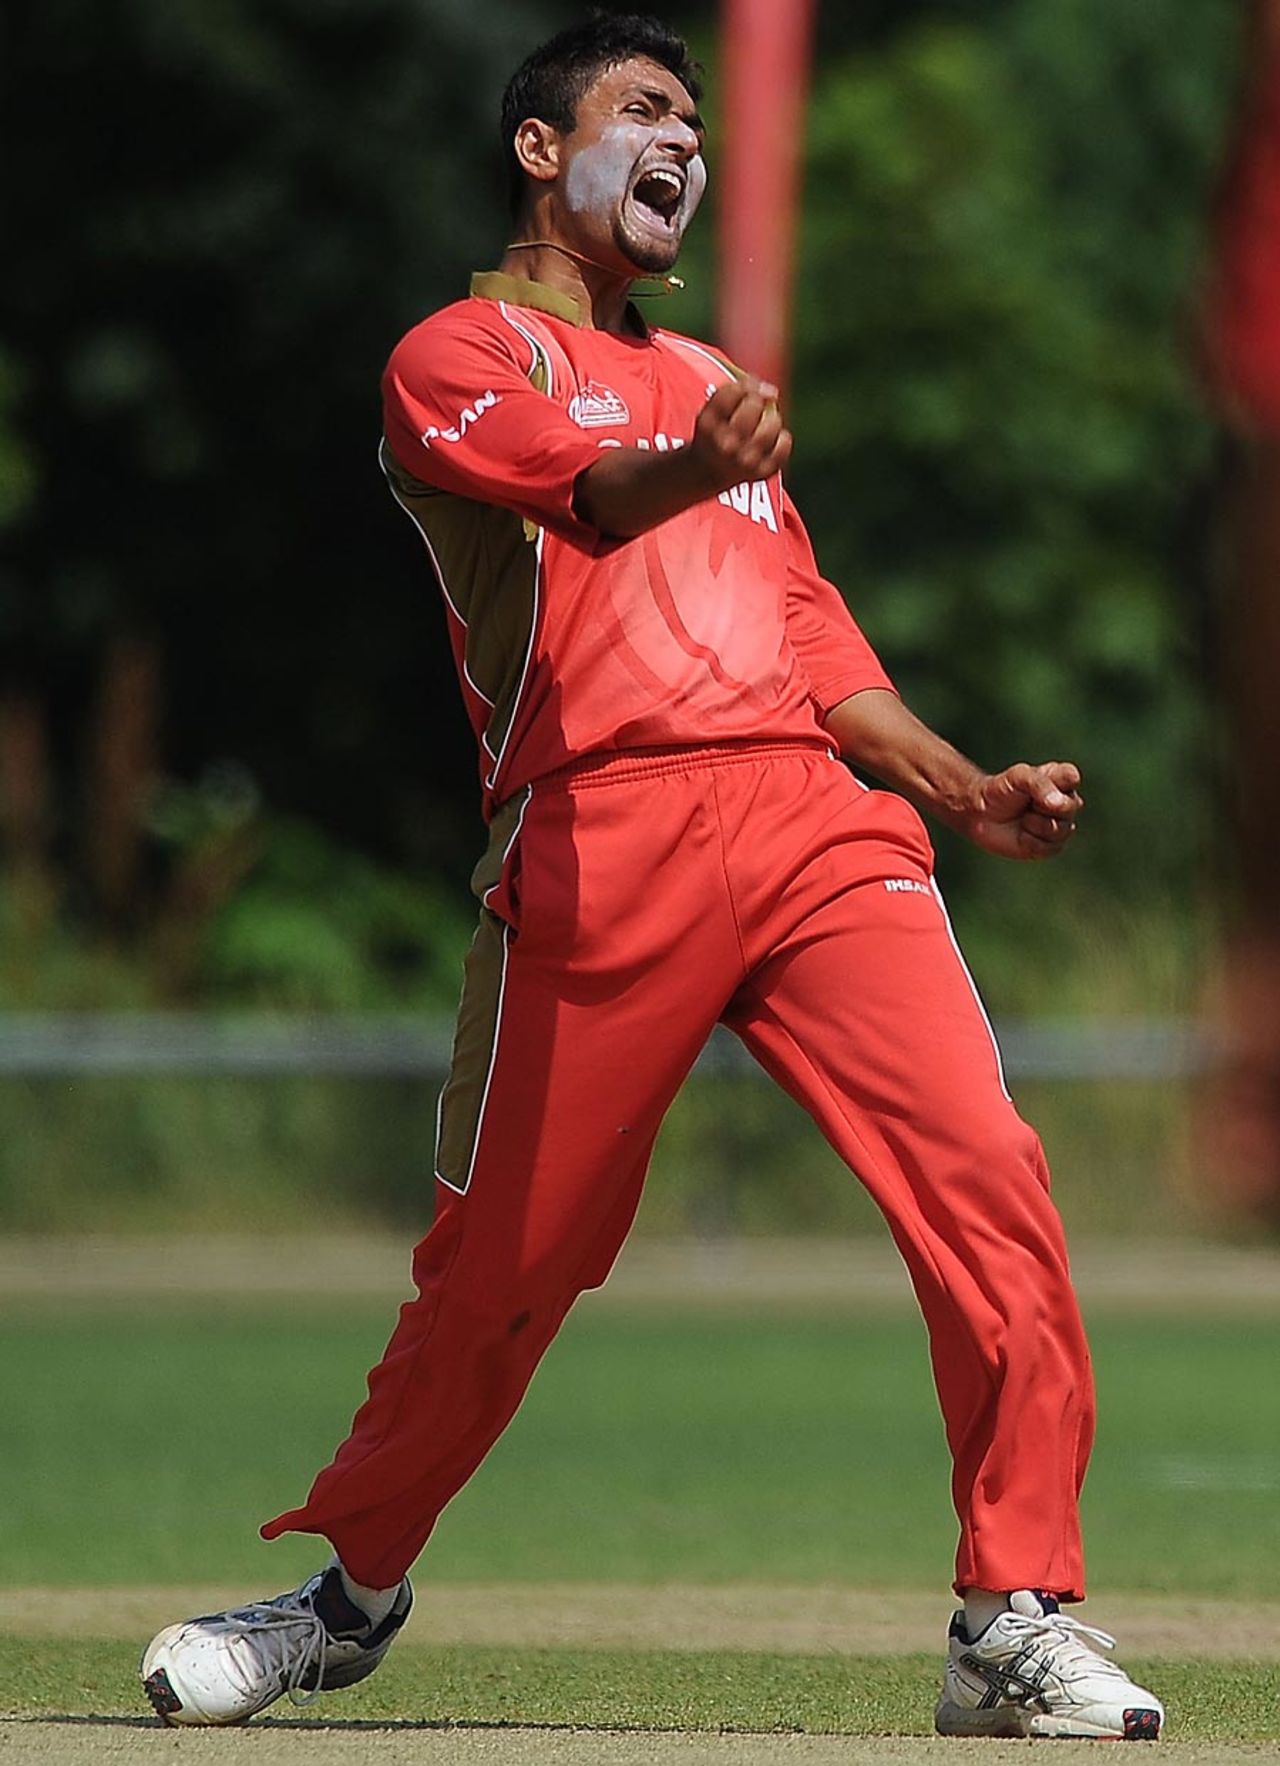 Harvir Baidwan took 3 for 24, Canada v Kenya, ICC World Cricket League Division 1, Schiedam, July 9, 2010